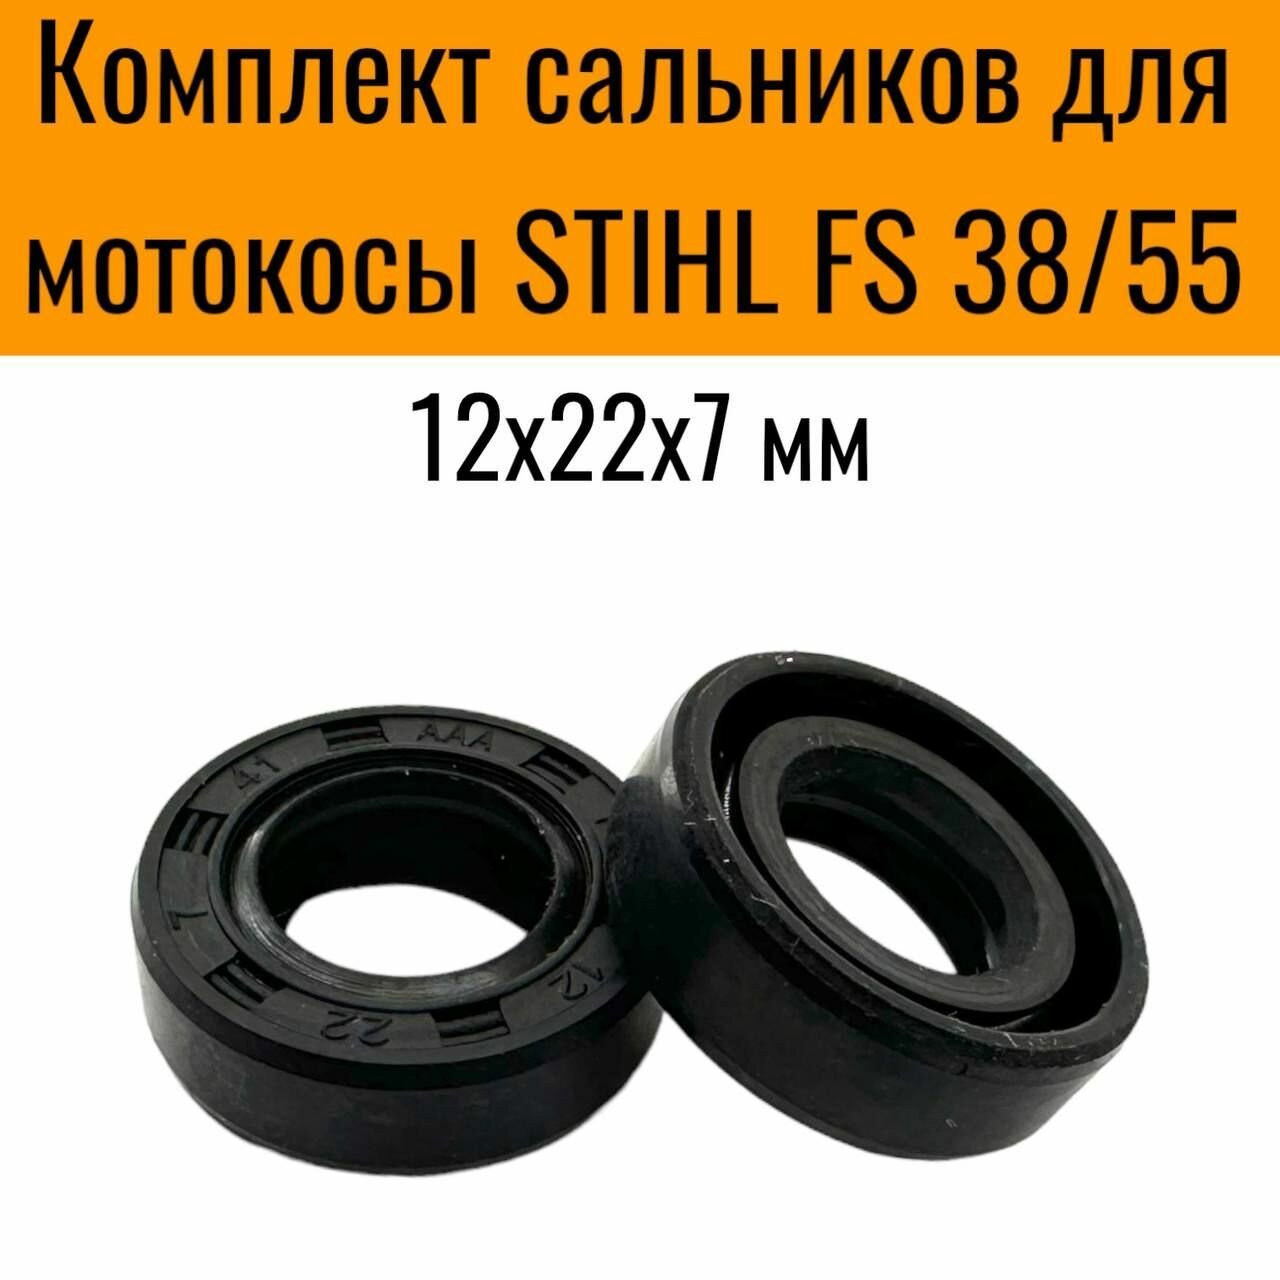 Комплект сальников для мотокосы STIHL FS 38/55 12х22х7 мм